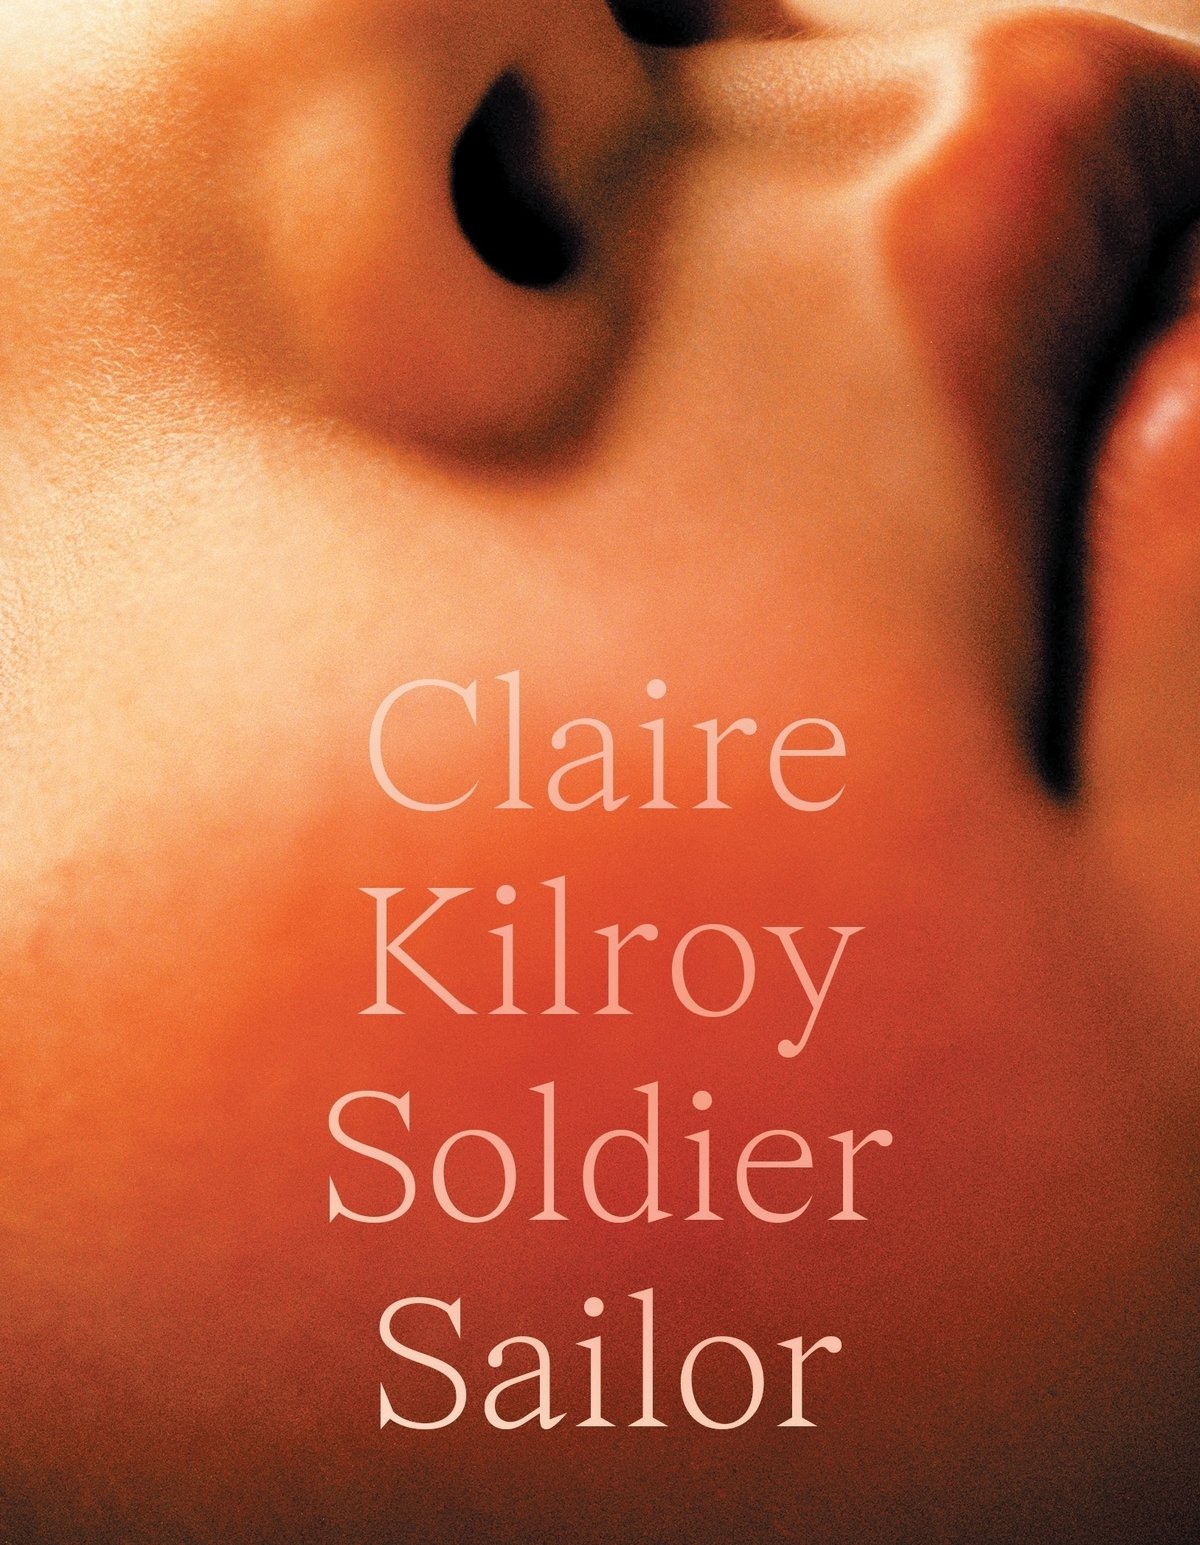 Claire Kilroy